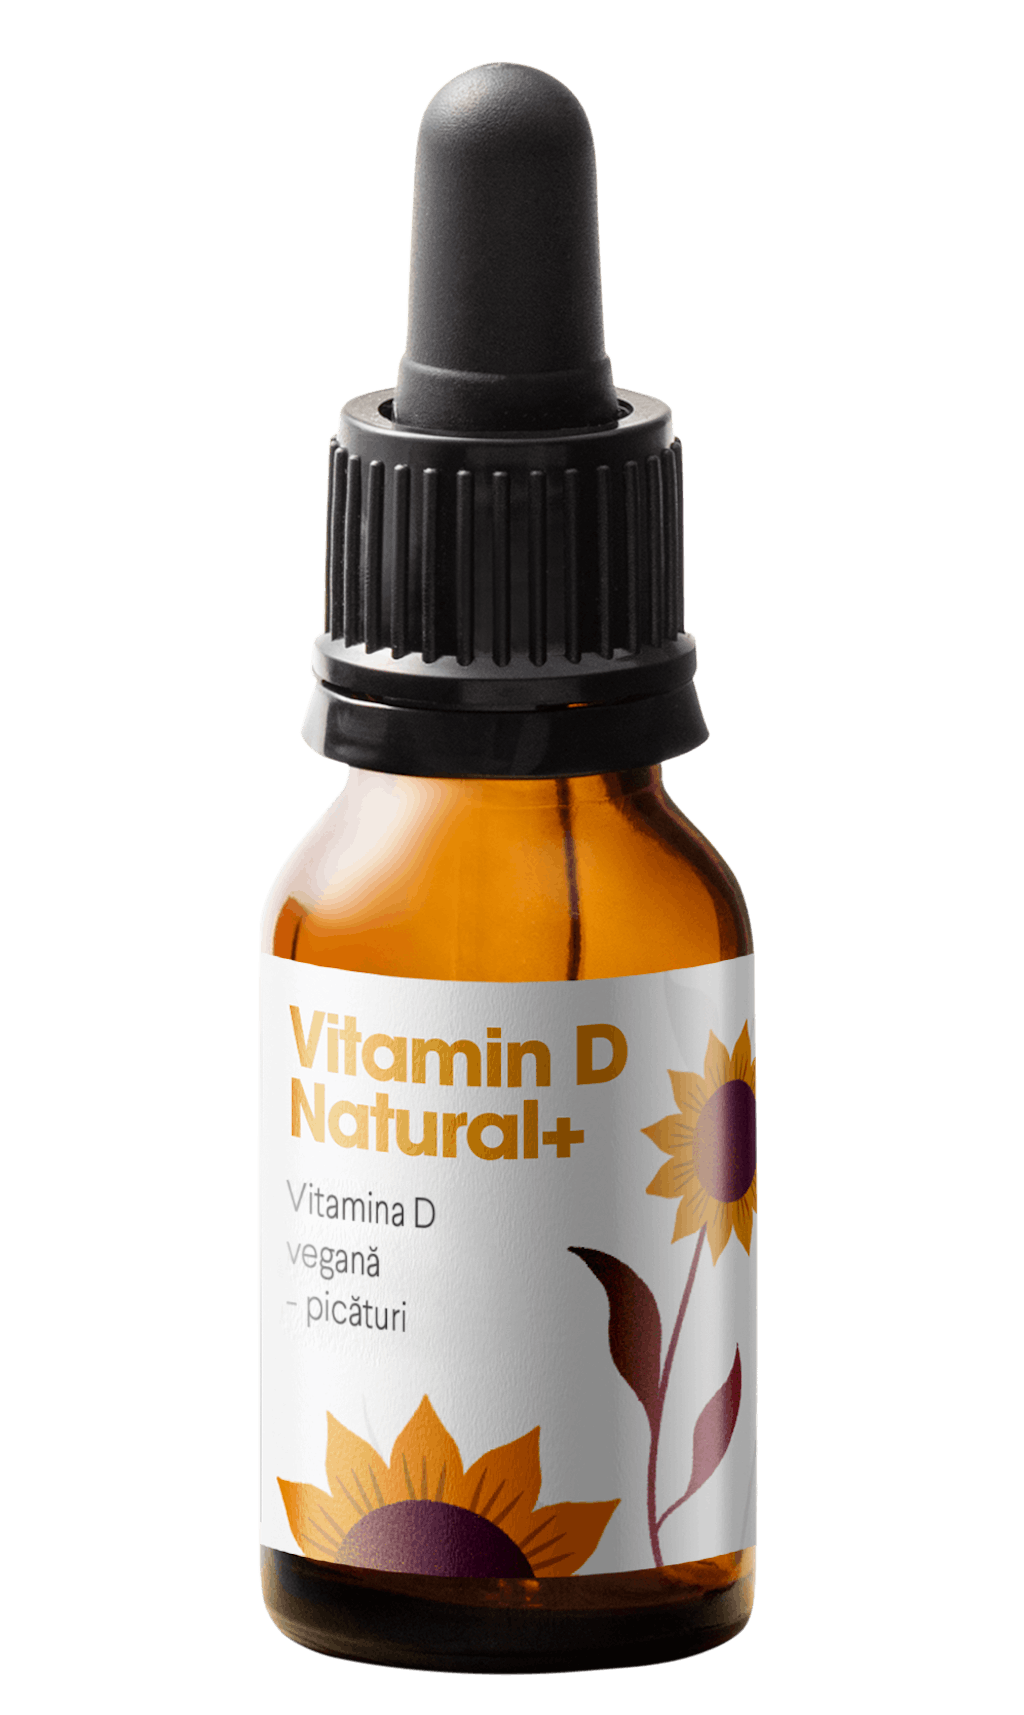 Vitamin D Natural+